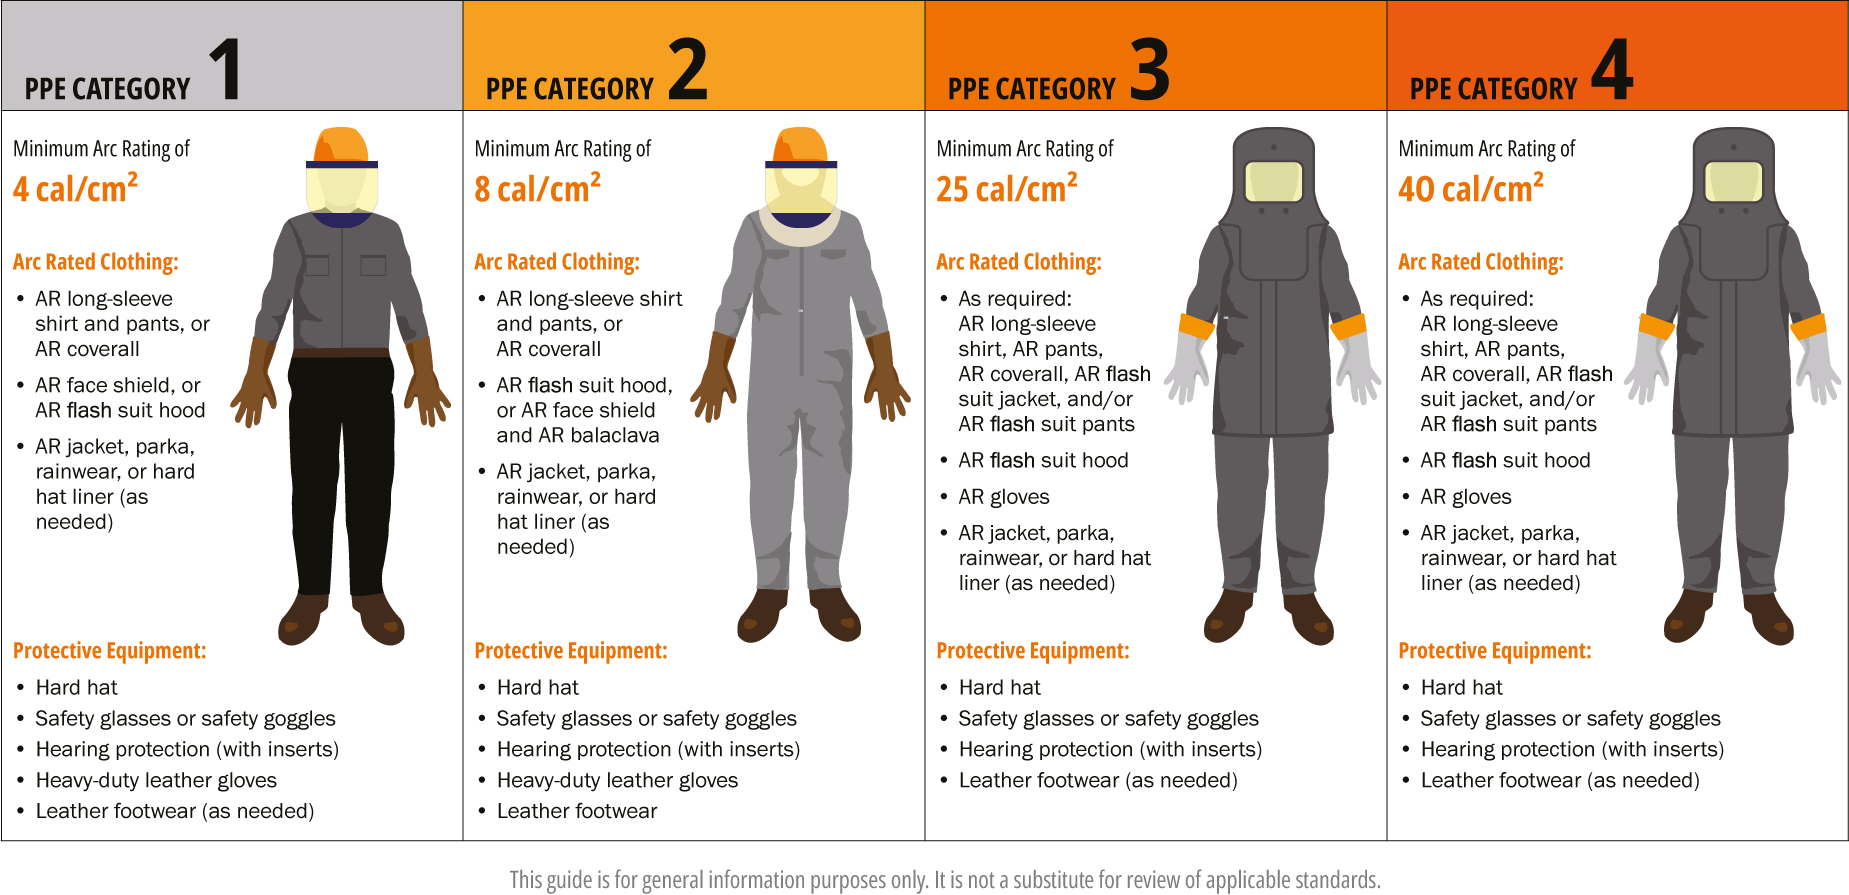 ARC FLASH PPE CATEGORY EXPLAINED GINTEX